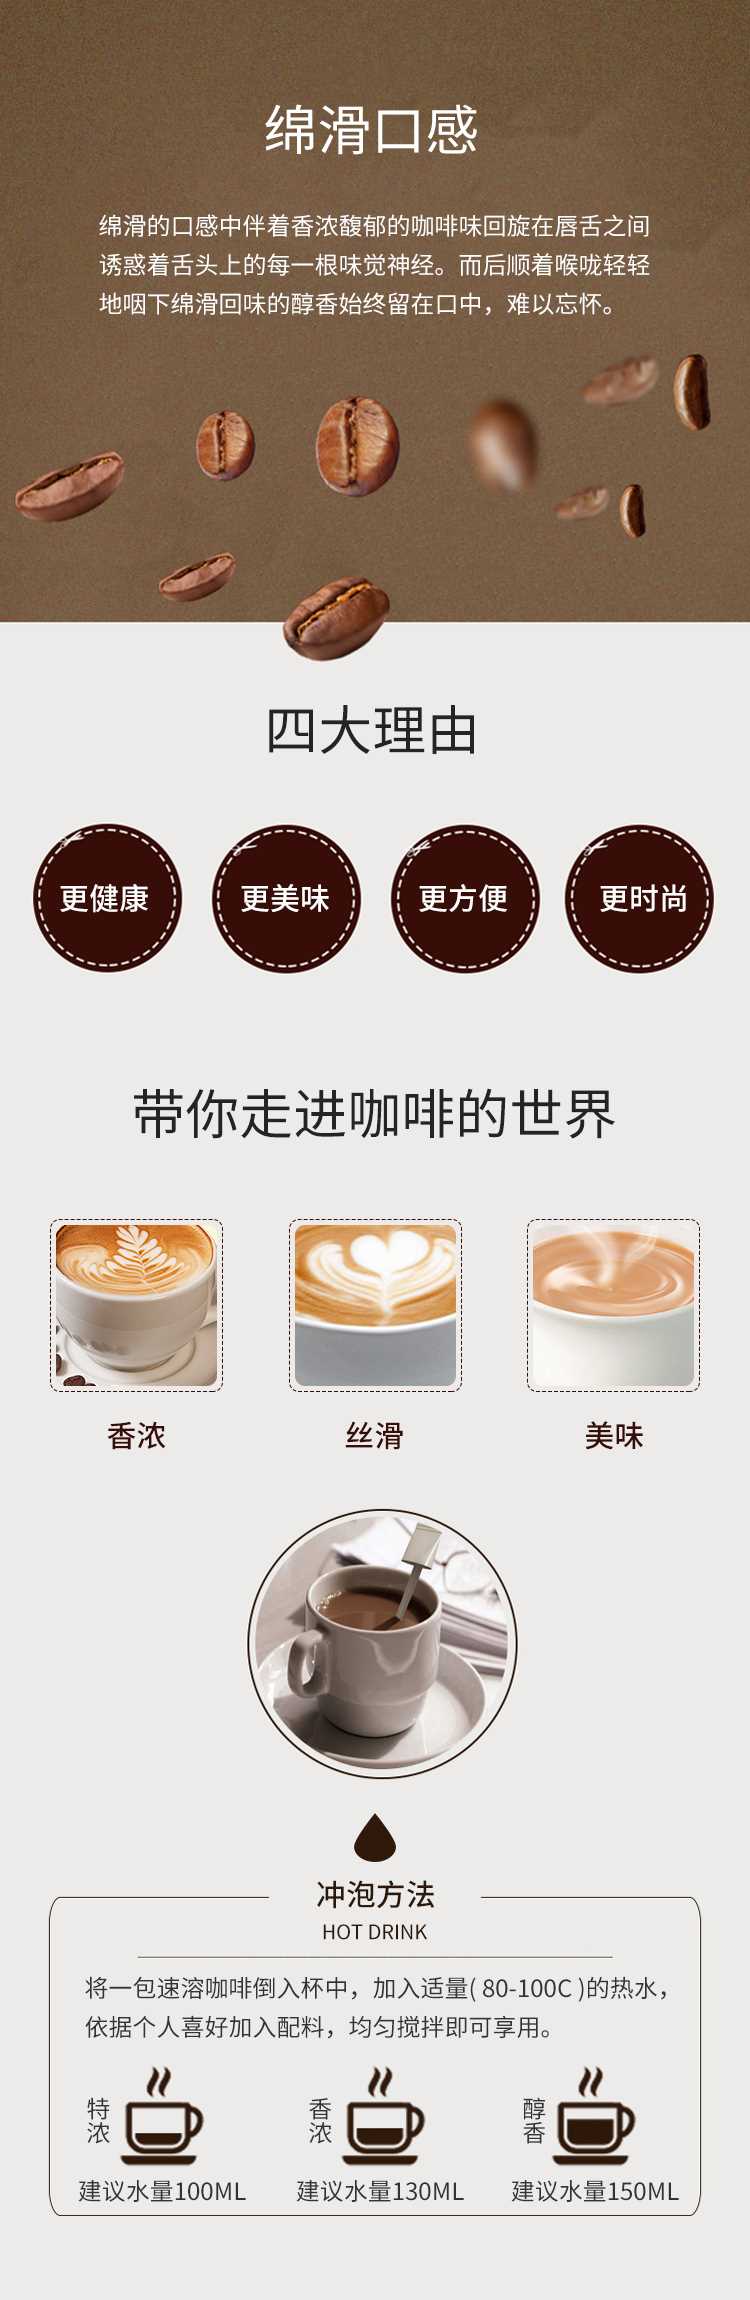 AGF-CAFE-LATORY棒状零糖浓牛奶咖啡拿铁8包入_03.jpg